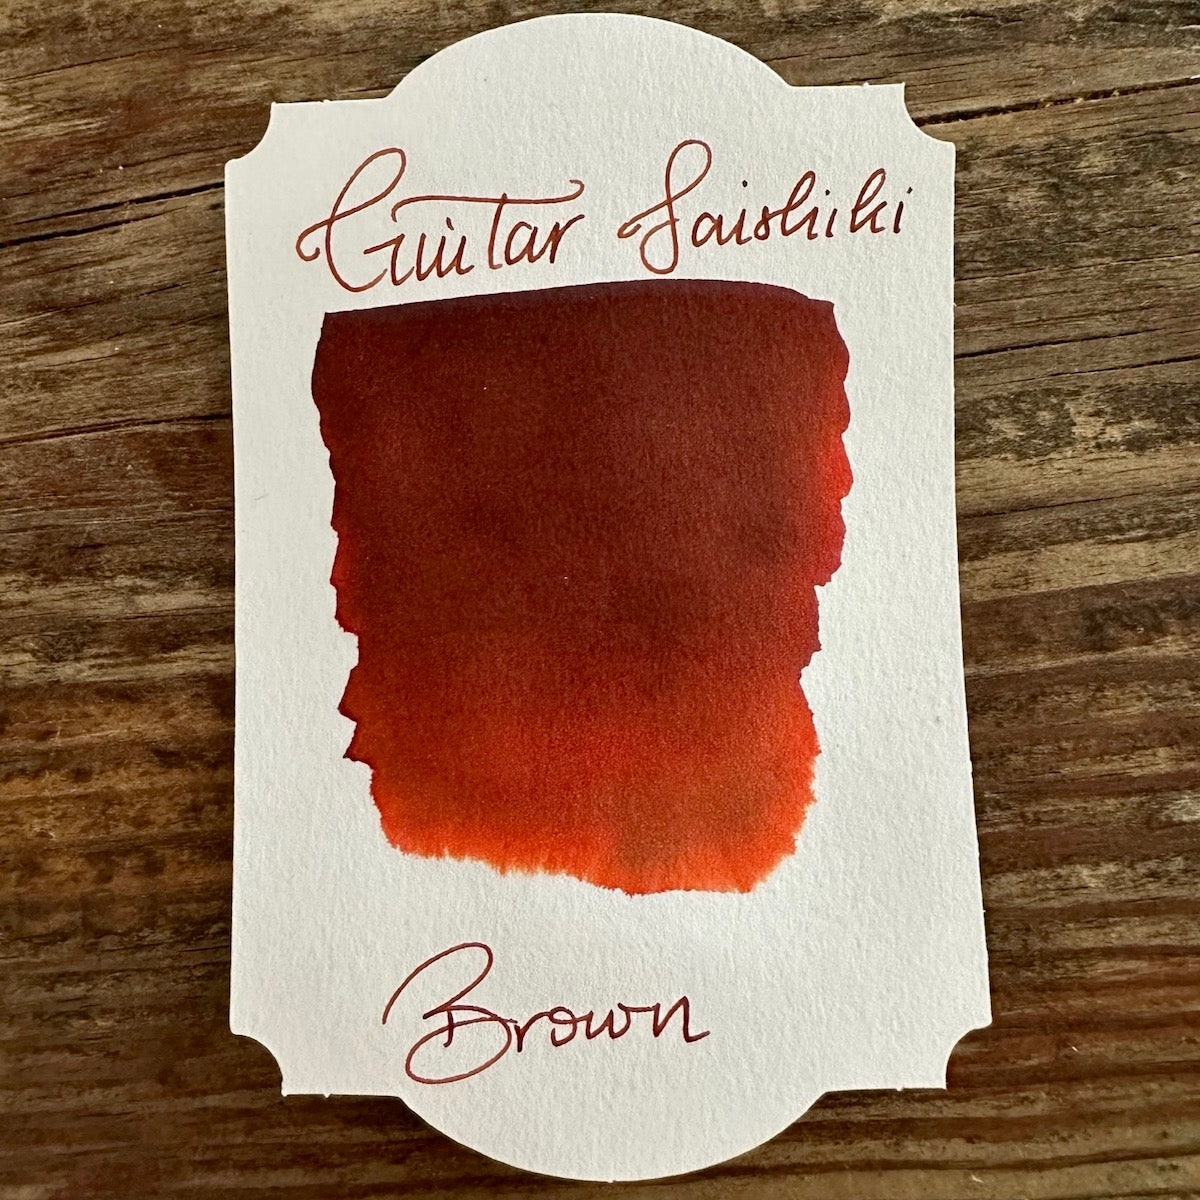 Guitar Saishiki Fountain Pen Ink, Brown | Teranishi